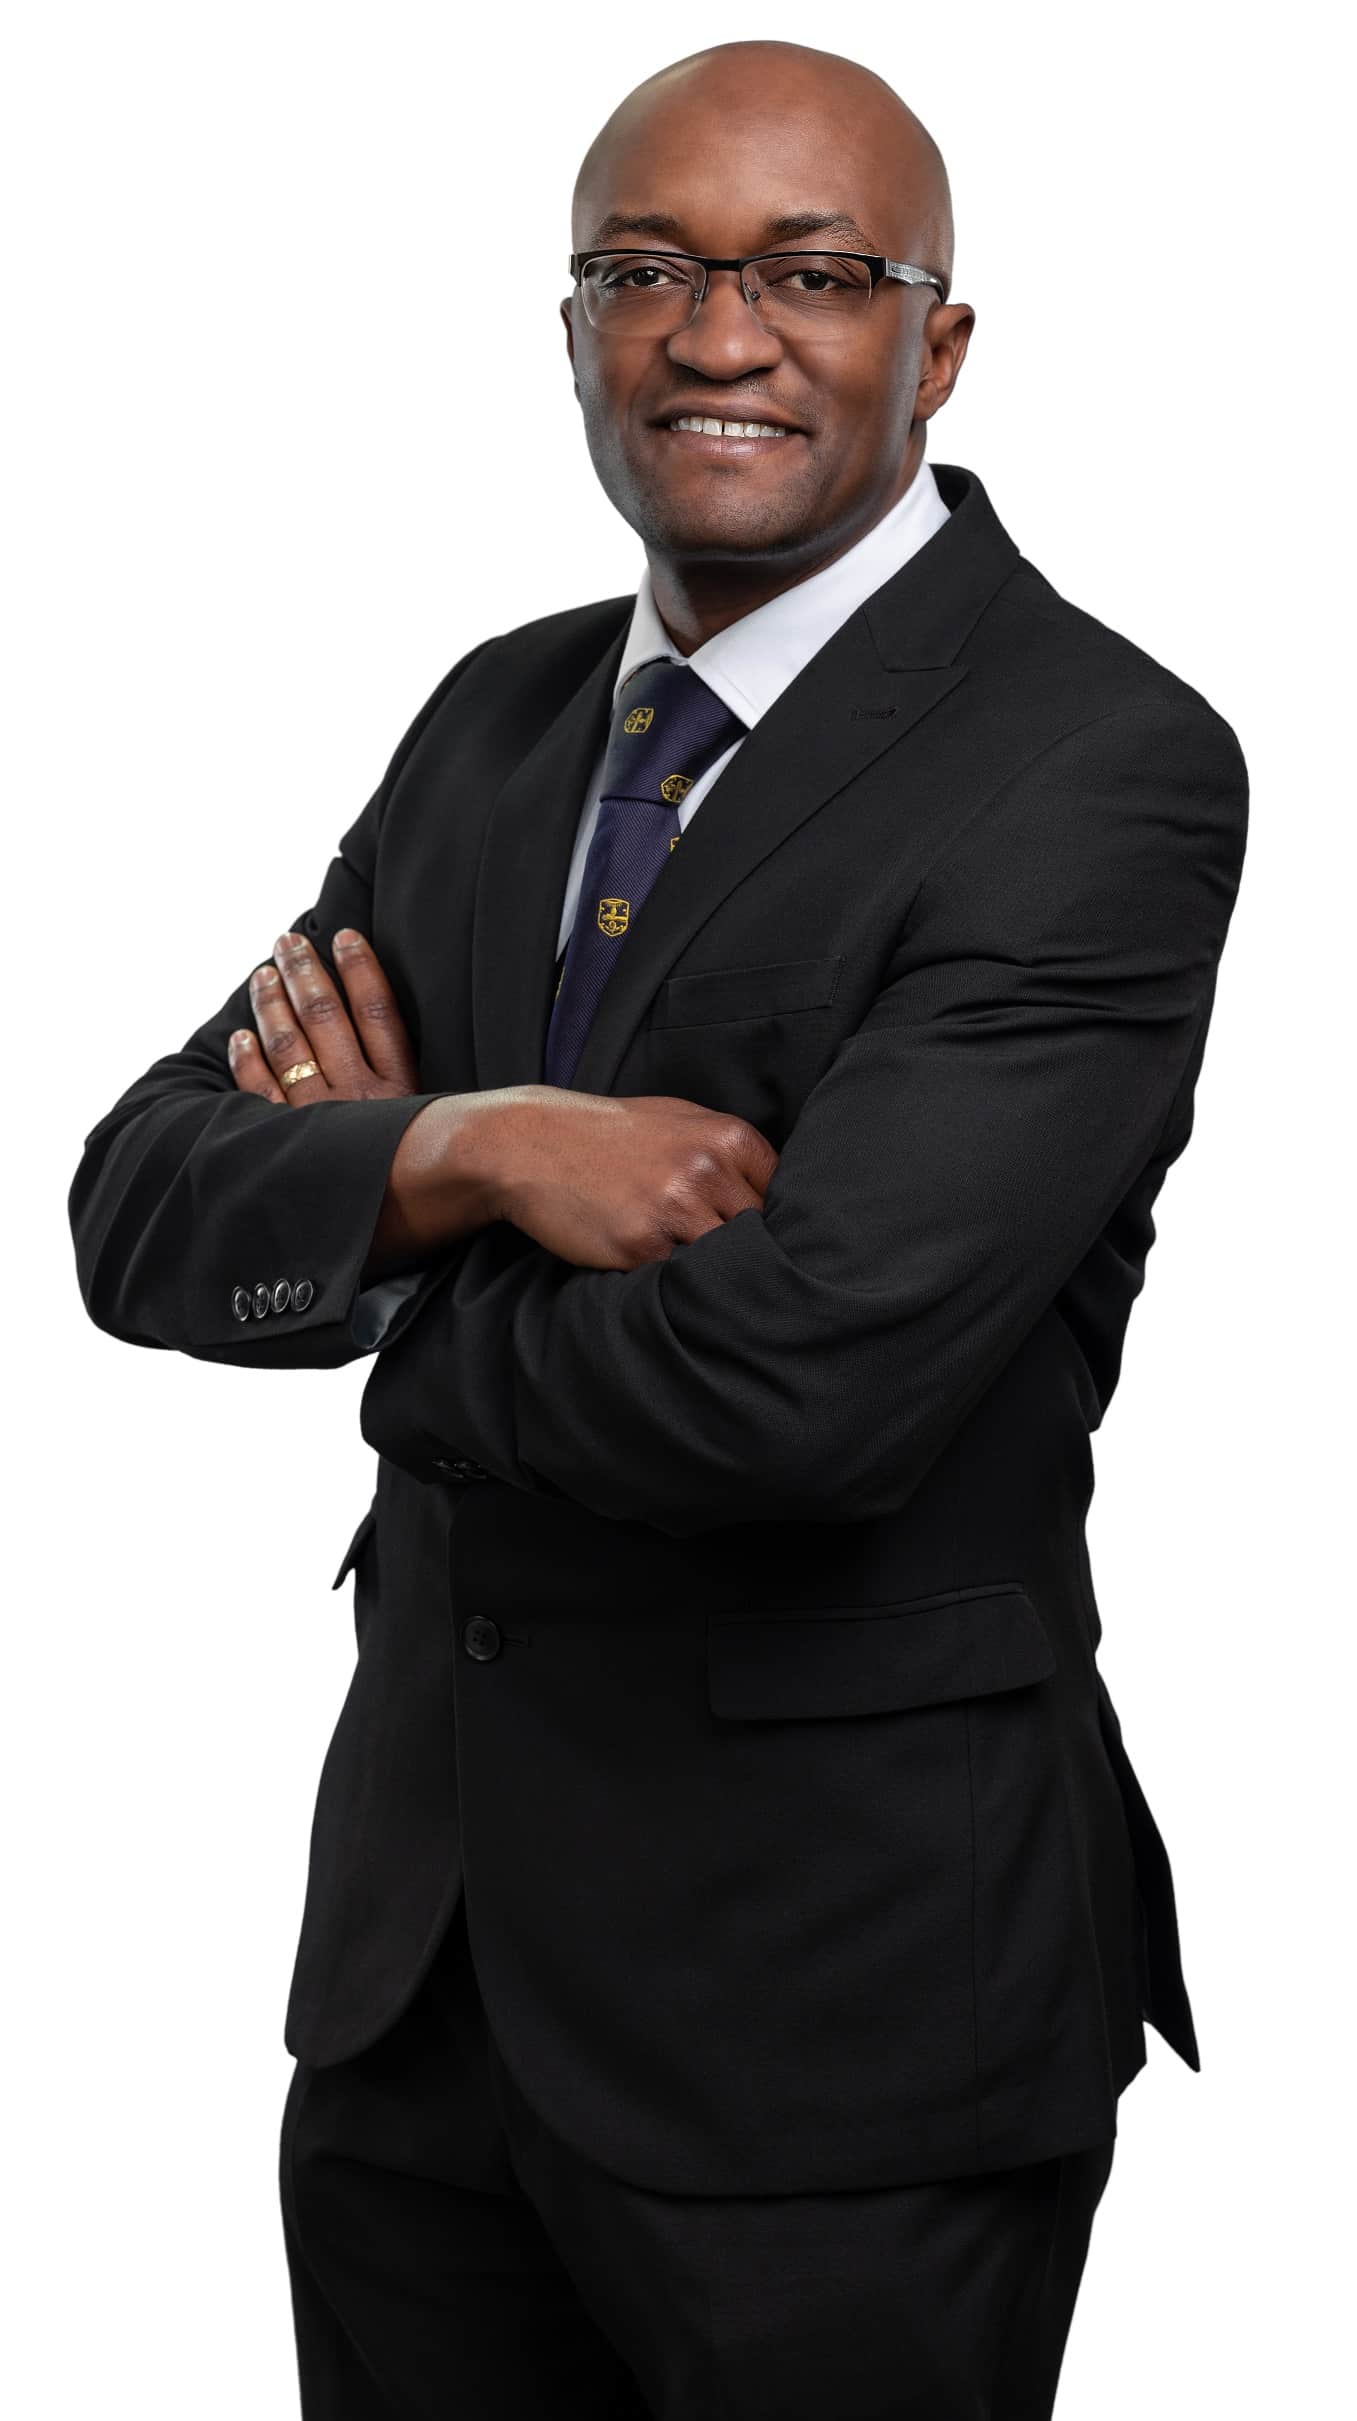 Dr. Emmanuel Nsutebu